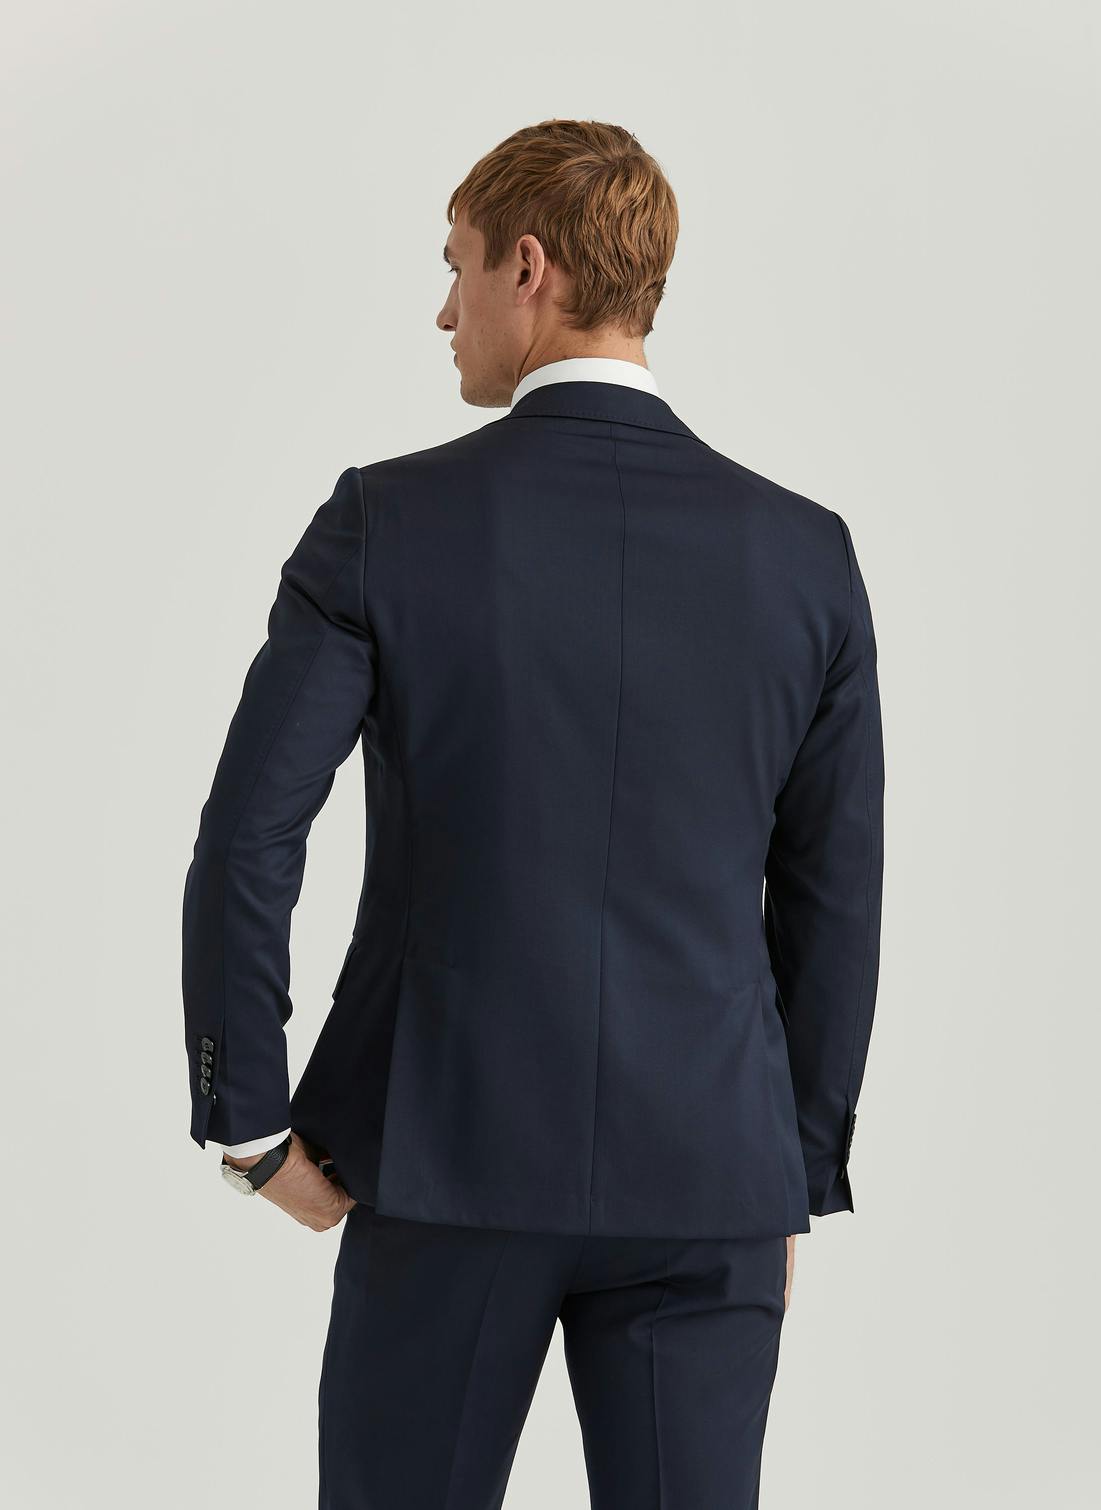 Heritage Prestige Suit Blazer